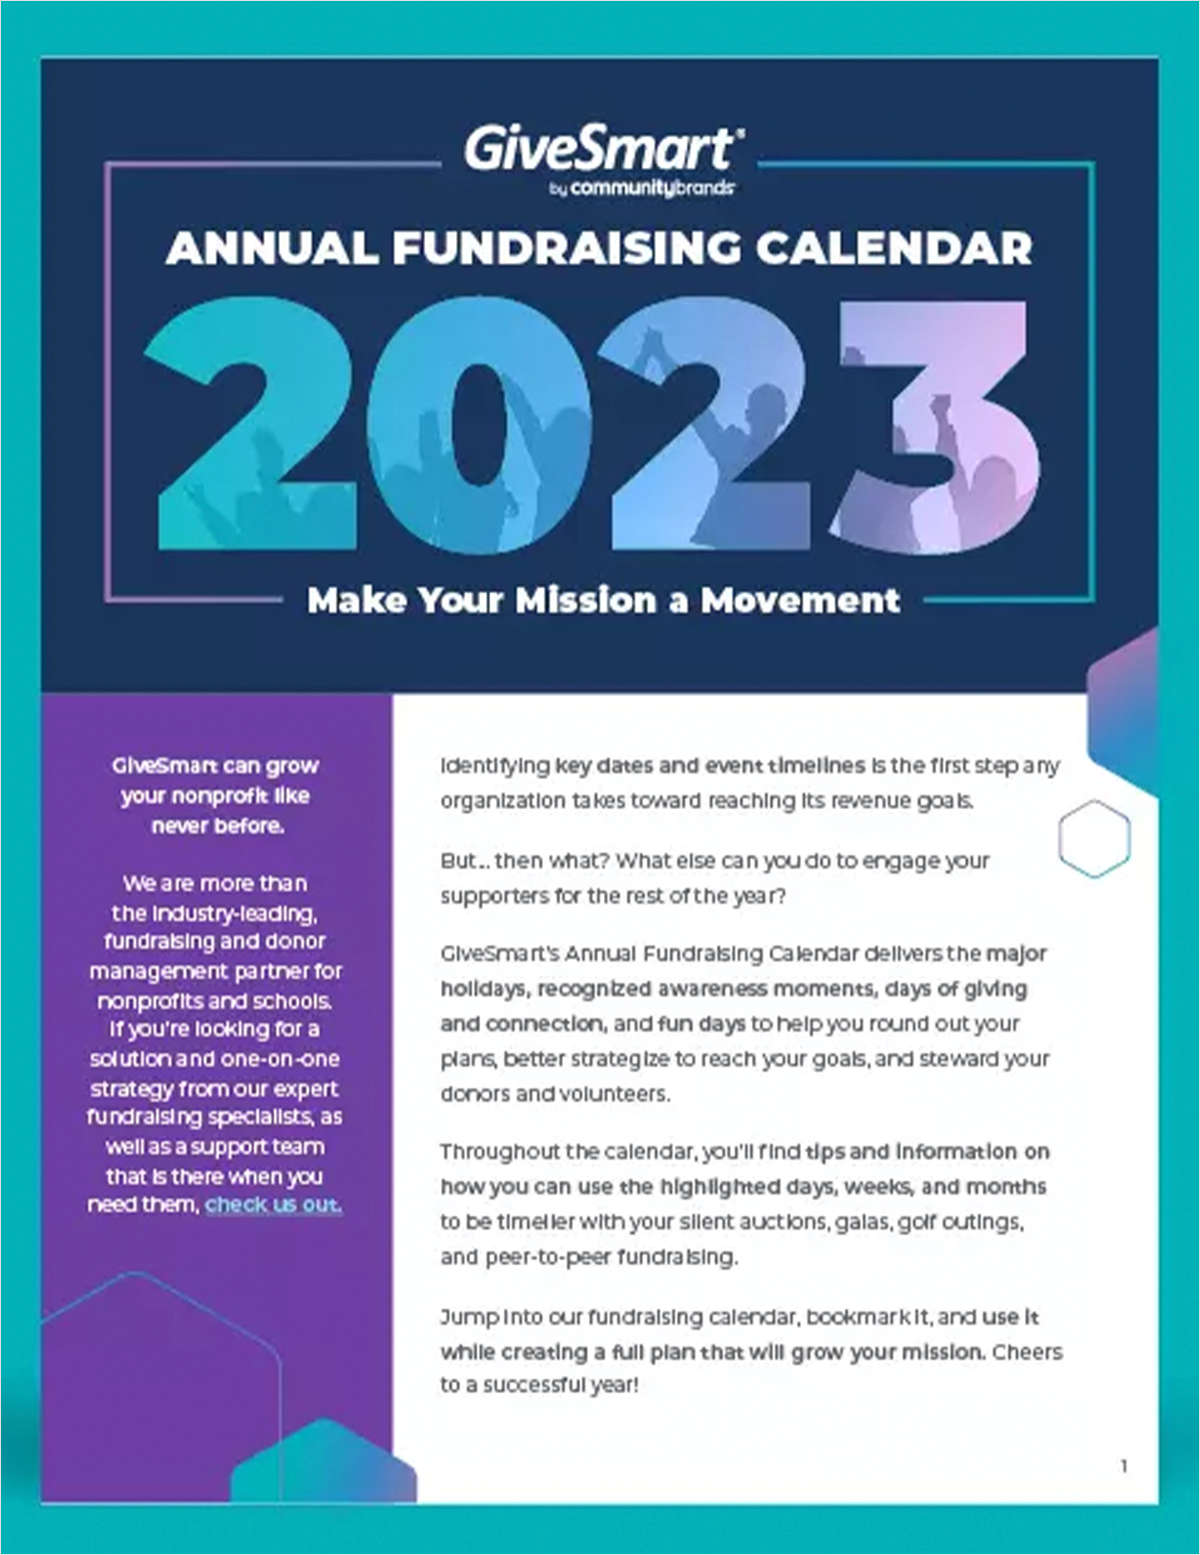 GiveSmart's 2023 Annual Fundraising Calendar